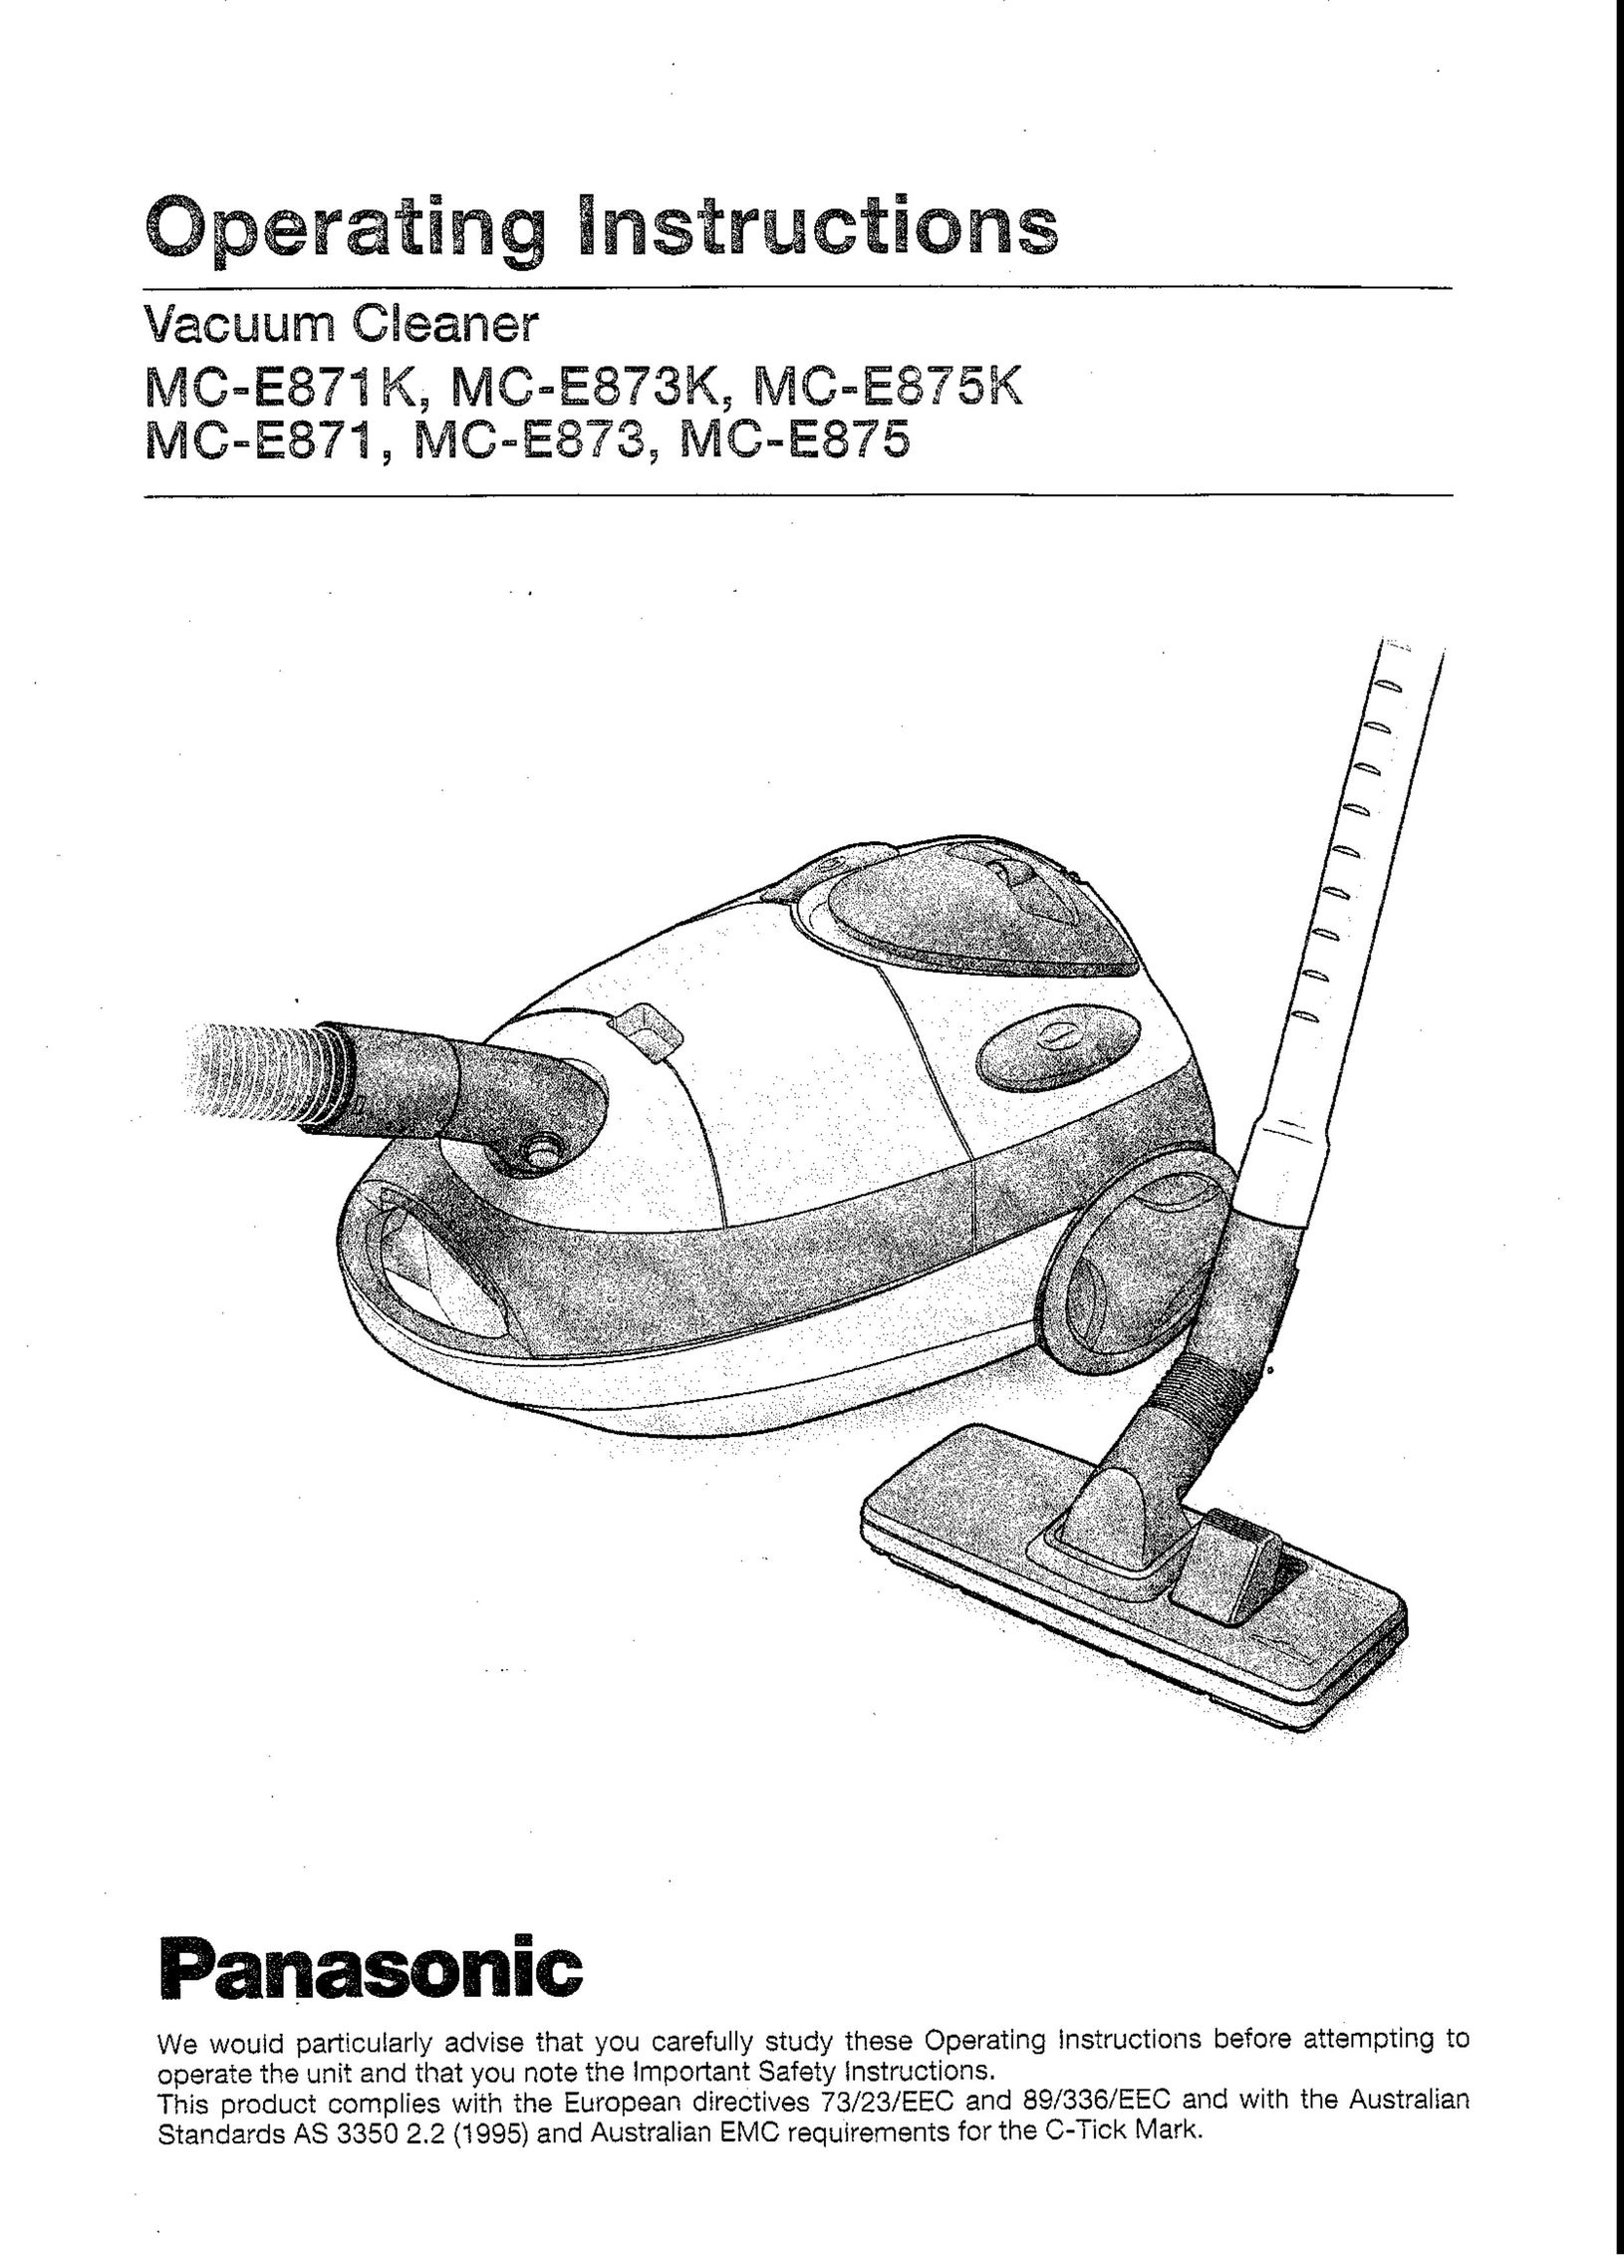 Panasonic MC-E875 Vacuum Cleaner User Manual